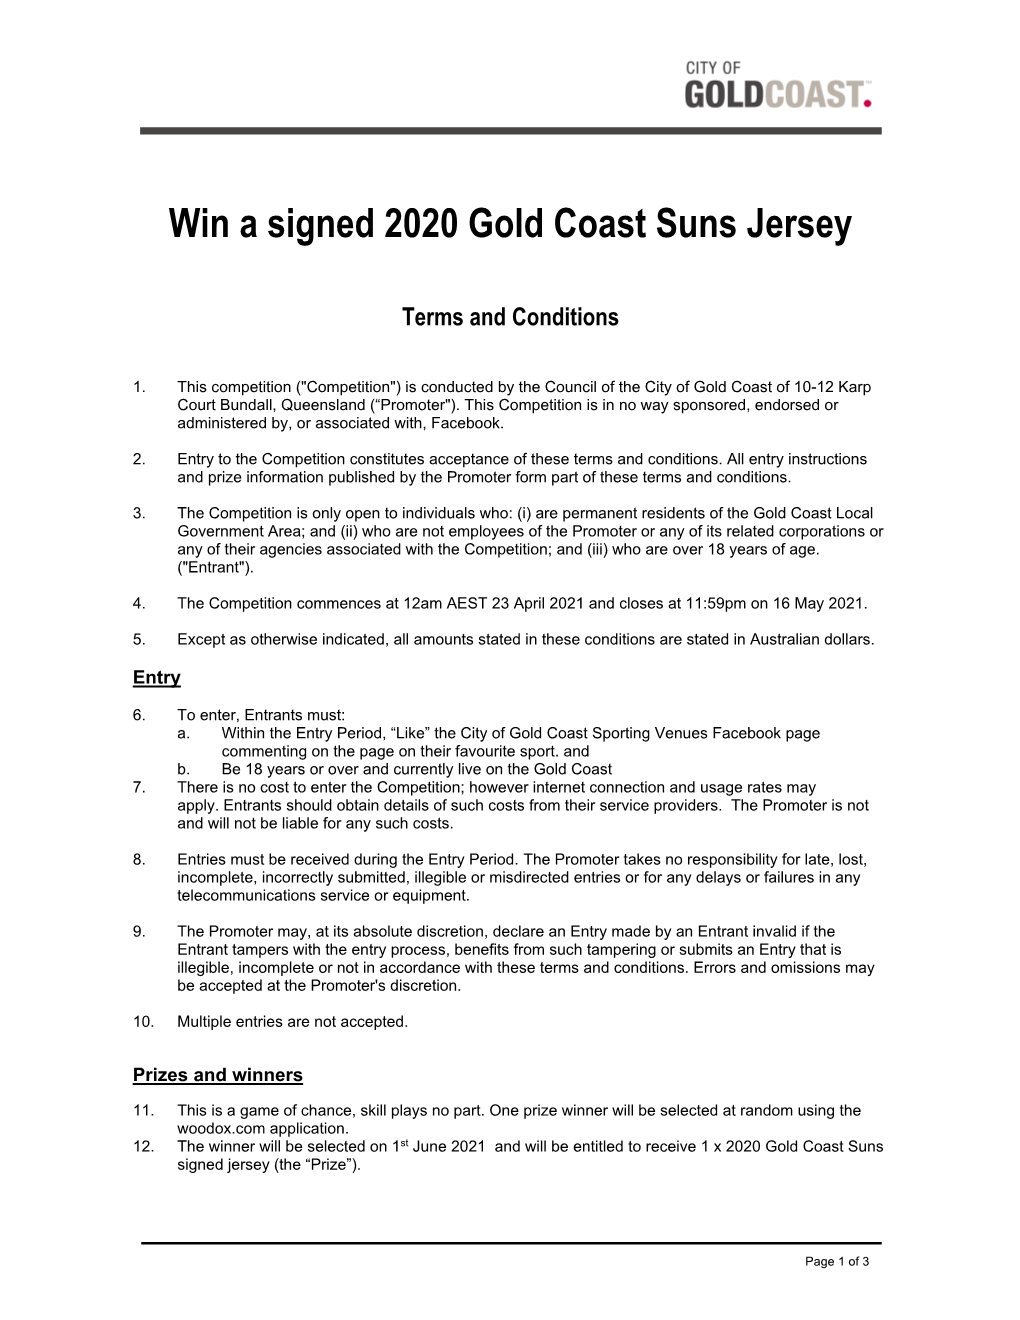 Win a Signed 2020 Gold Coast Suns Jersey